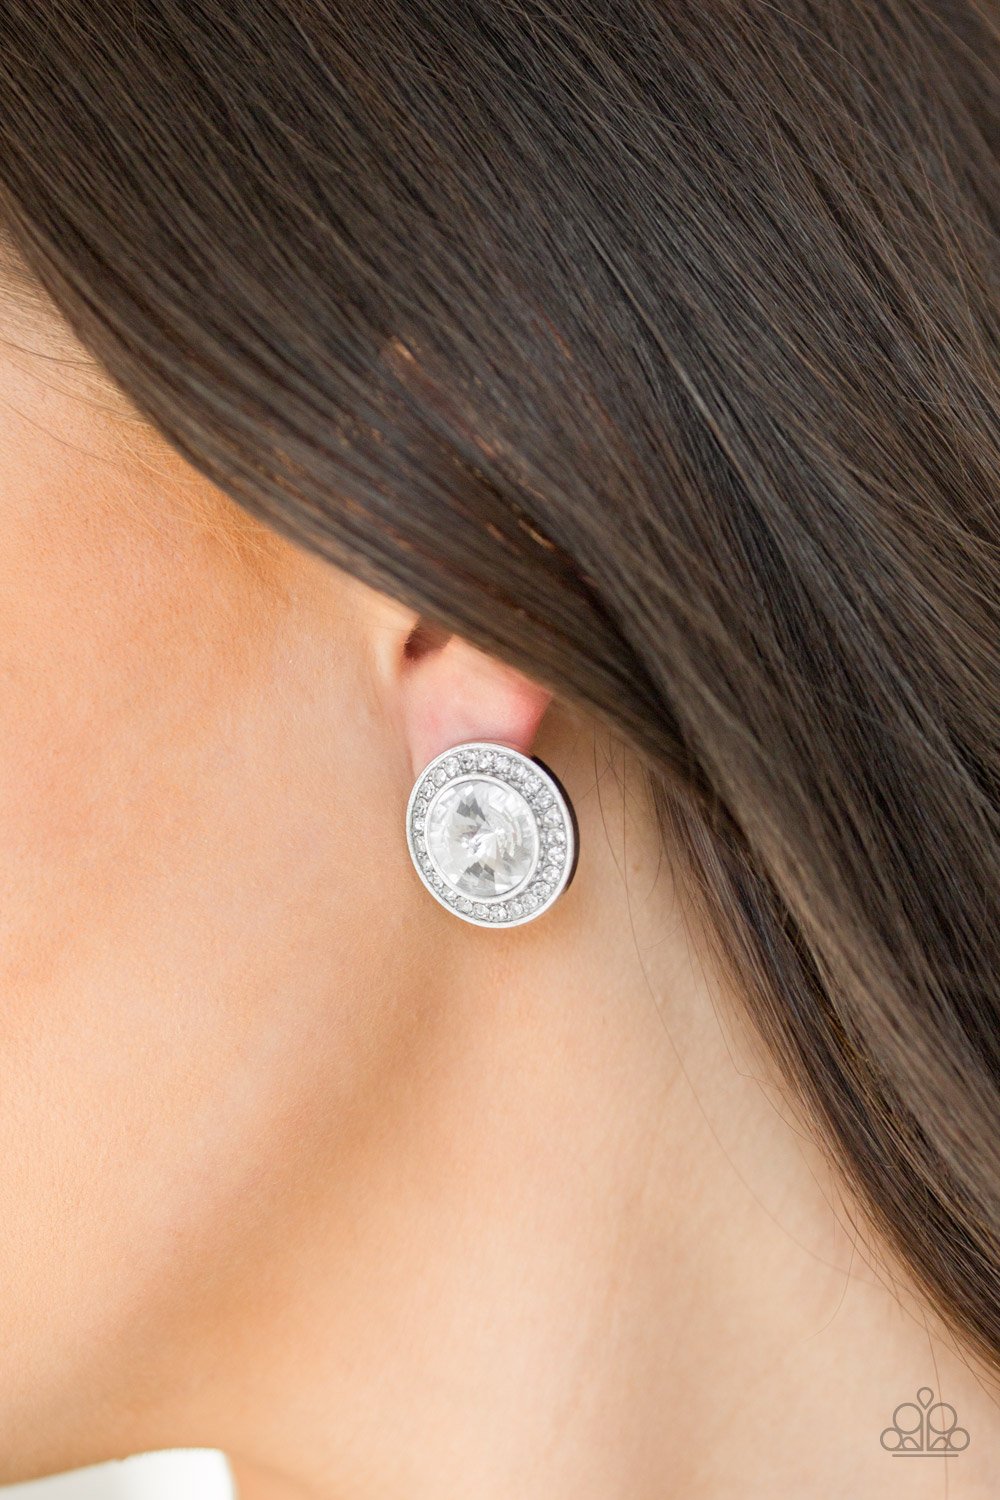 What Should I BLING-white-Paparazzi earrings